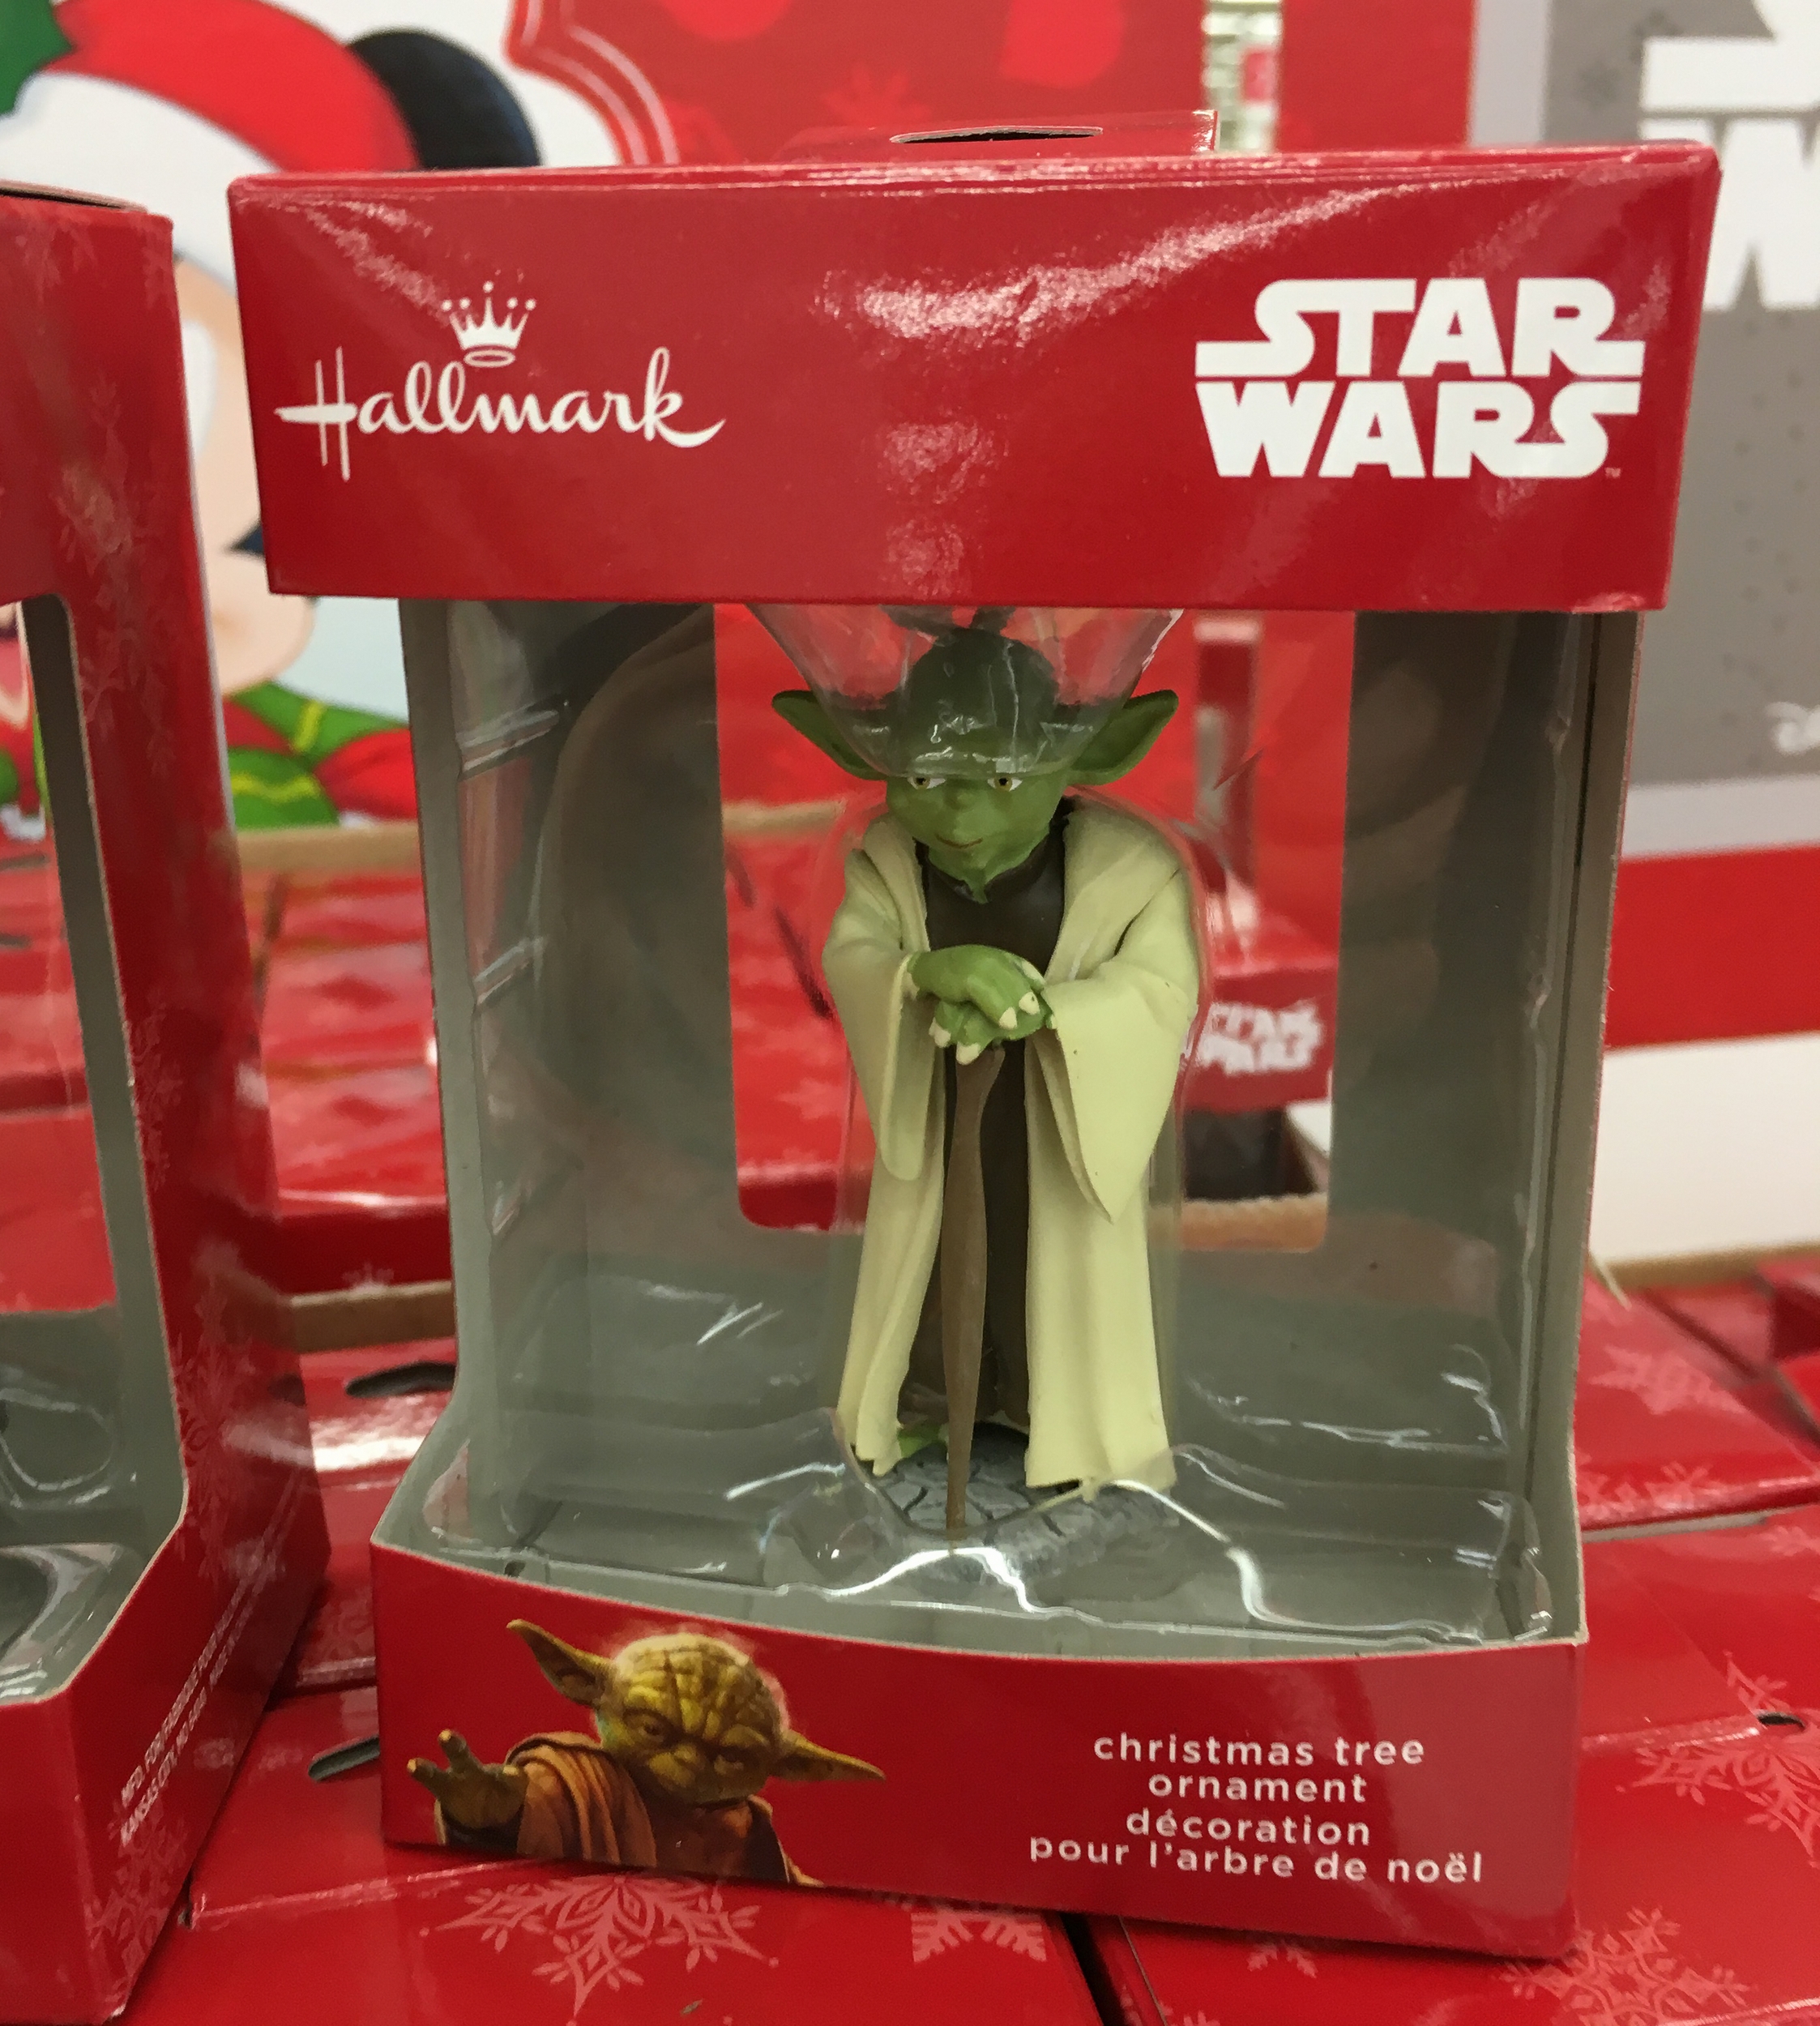 Hallmark-Retail-Star-Wars-Ornaments-2016-006.jpg